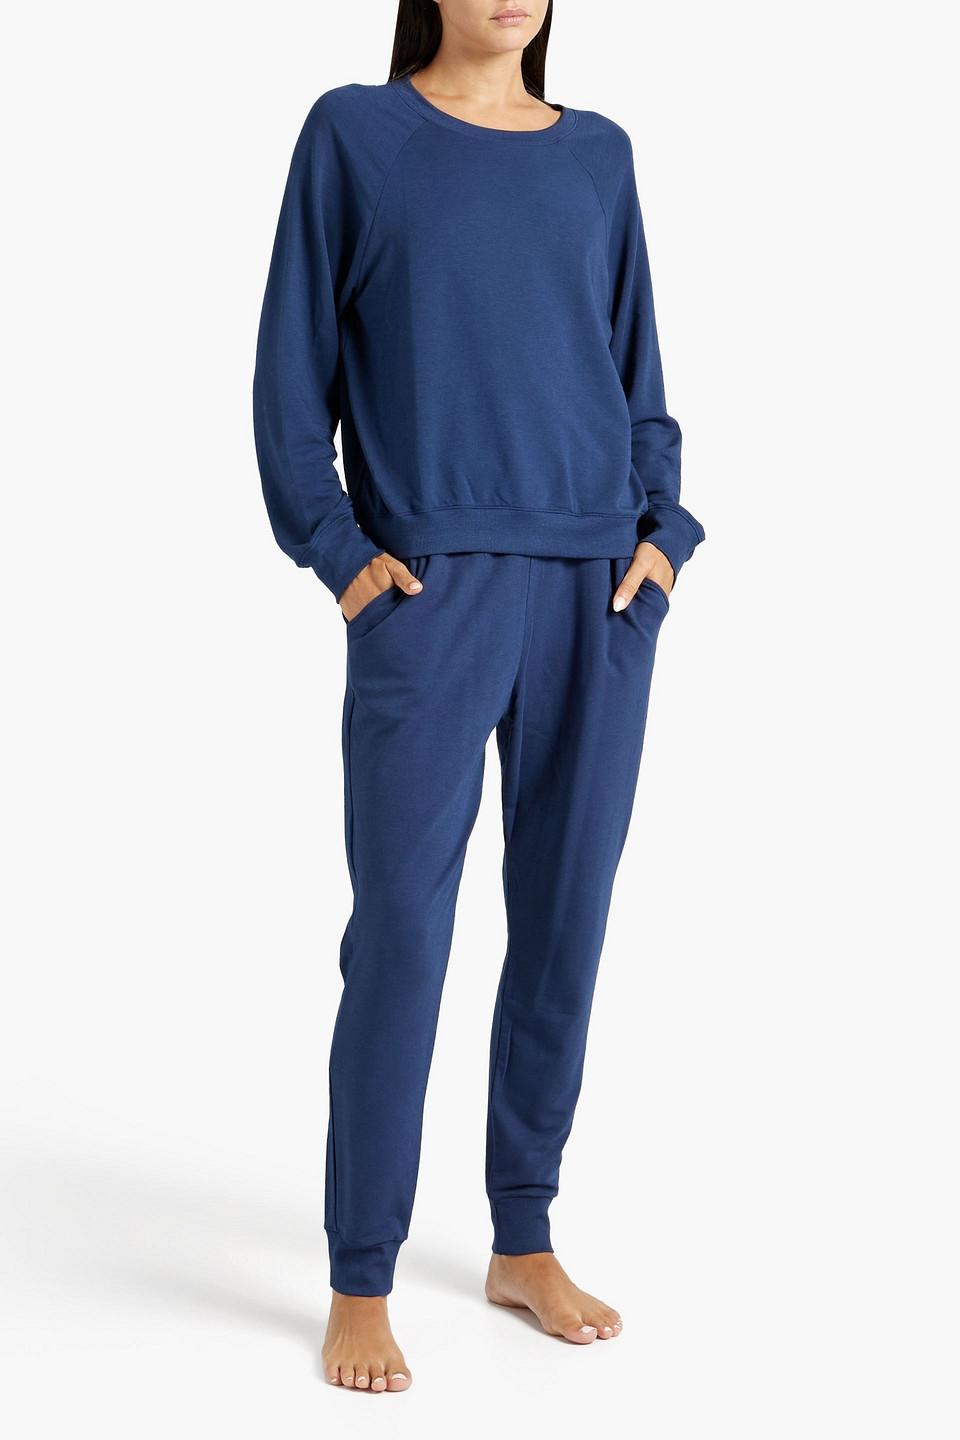 Eberjey Blair Jersey Pajama Top in Blue | Lyst